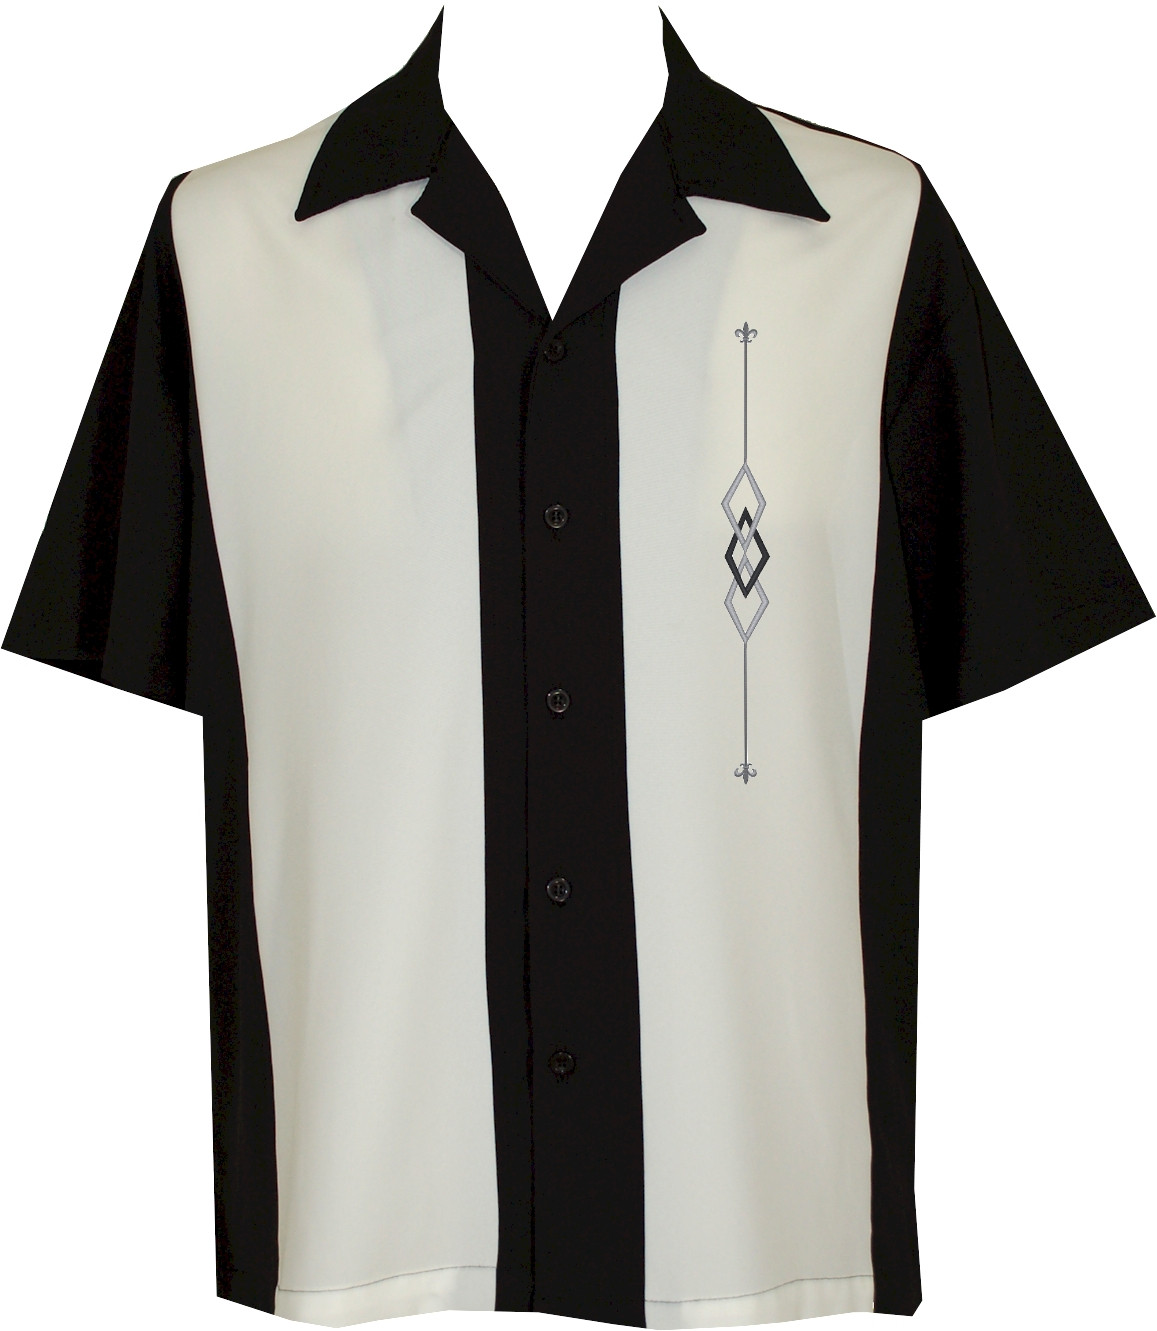 Black Camp Shirt| Embroidered Button Up Bowling Shirt